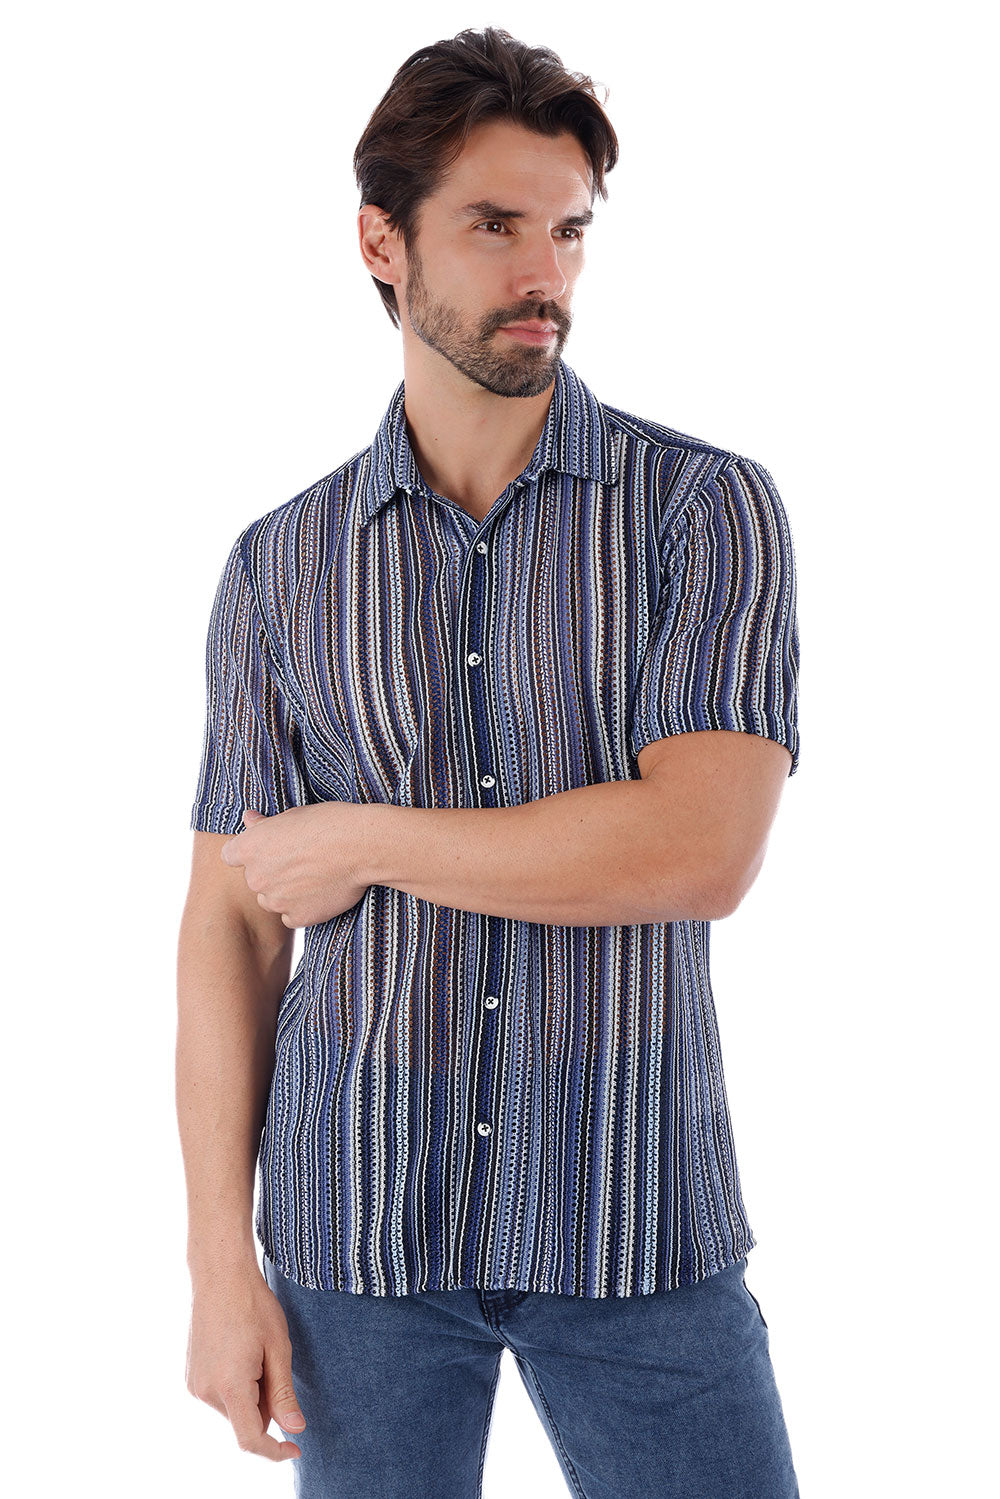 BARABAS Men's Knit Stretch Button Down Short Sleeve Shirts 4SST03 Navy